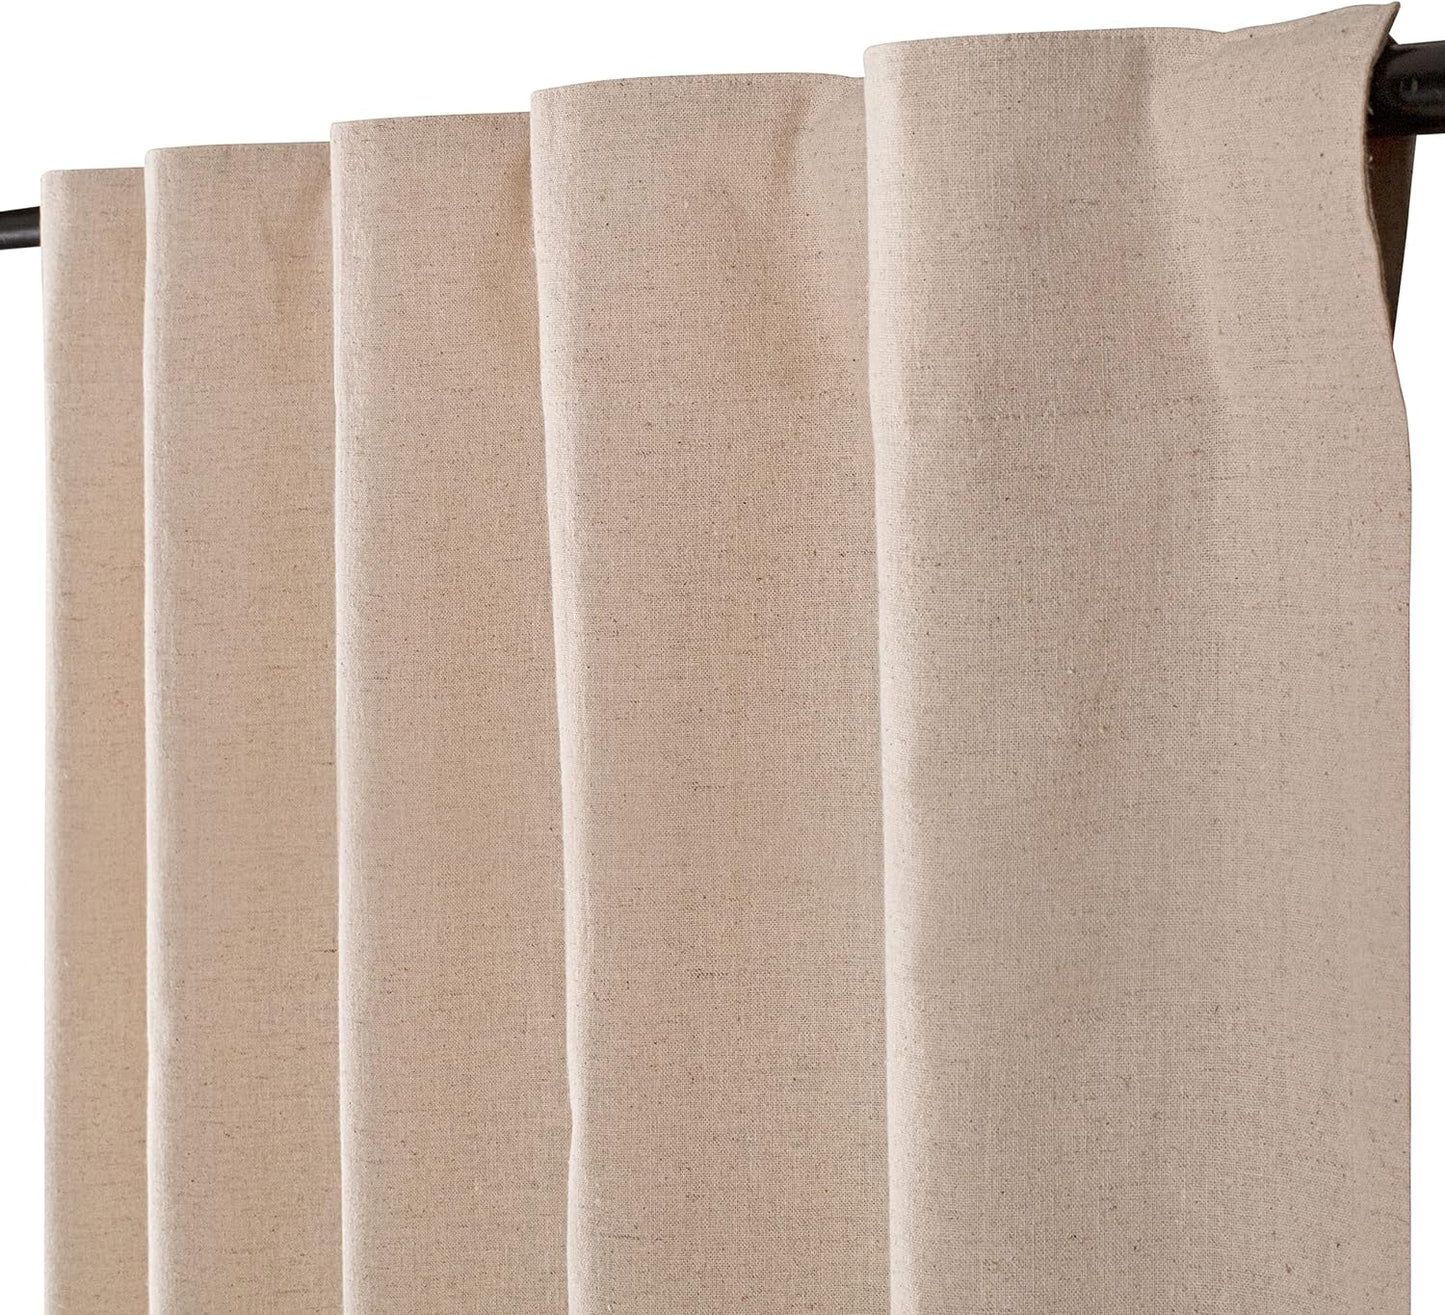 Bedding Craft Curtains,Linen Curtains,Natural Curtains,Linen Drapes,Linen Room Darkening Curtains,Flax Linen Curtain,Curtain & Drapes,Natural Linen Curtains,Taupe Linen Curtains 108 Inch  Bedding Craft   